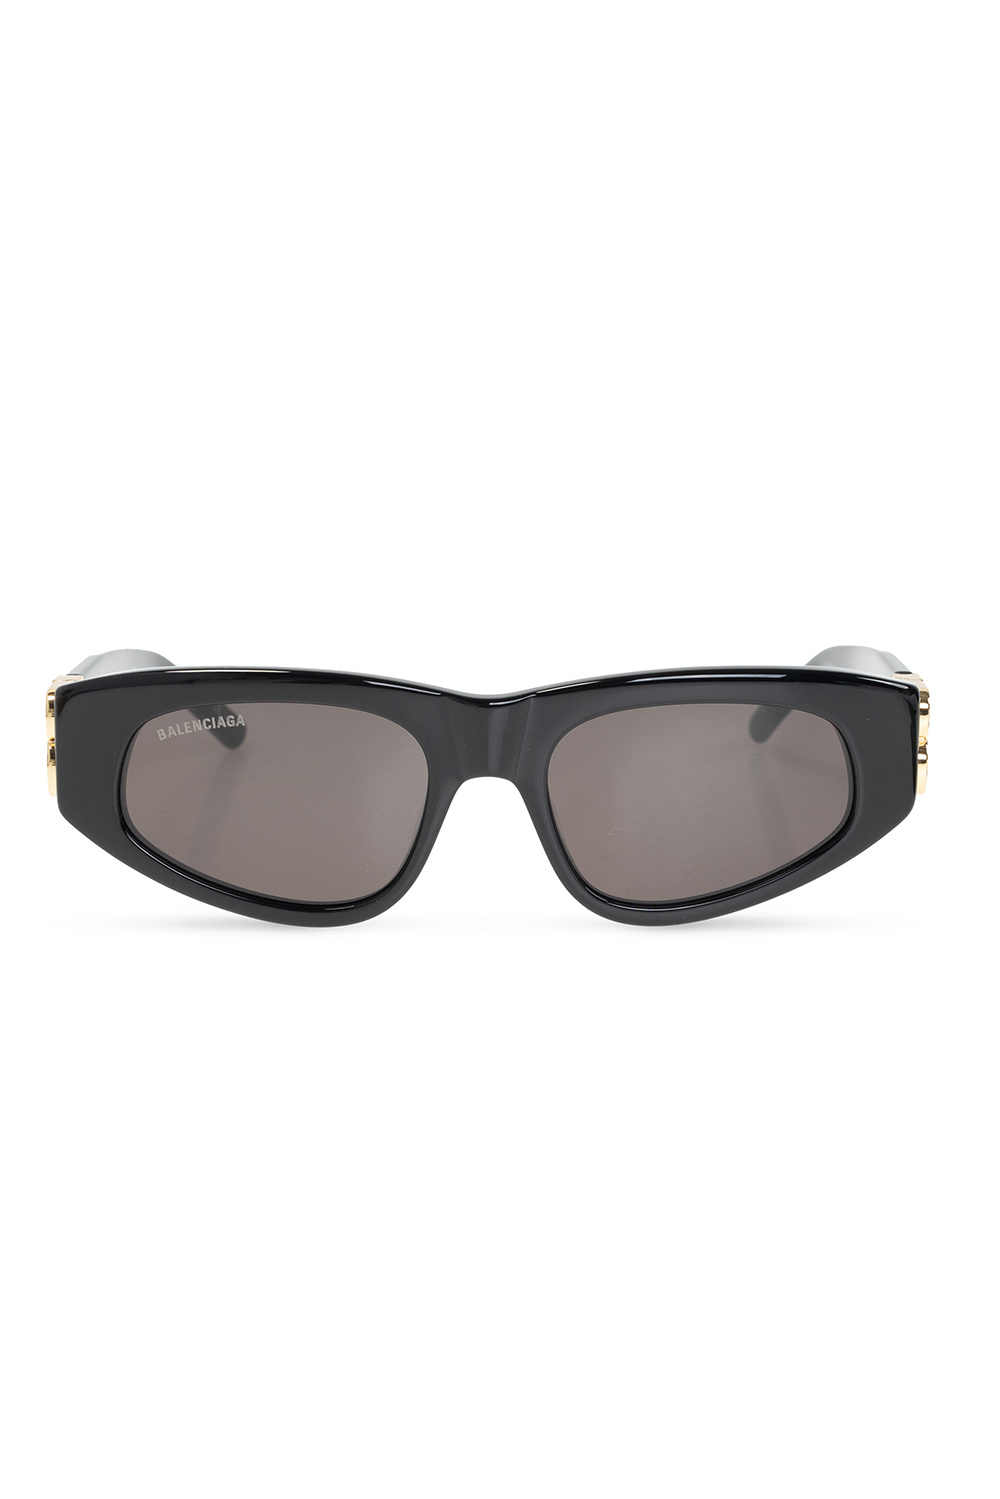 cantante avaro soldadura Clement Sun Saddle Tortoise pure Brown Sunglasses - Balenciaga Les lunettes  97 rectangle - frame sunglasses Nero | StclaircomoShops | Women's  Accessories